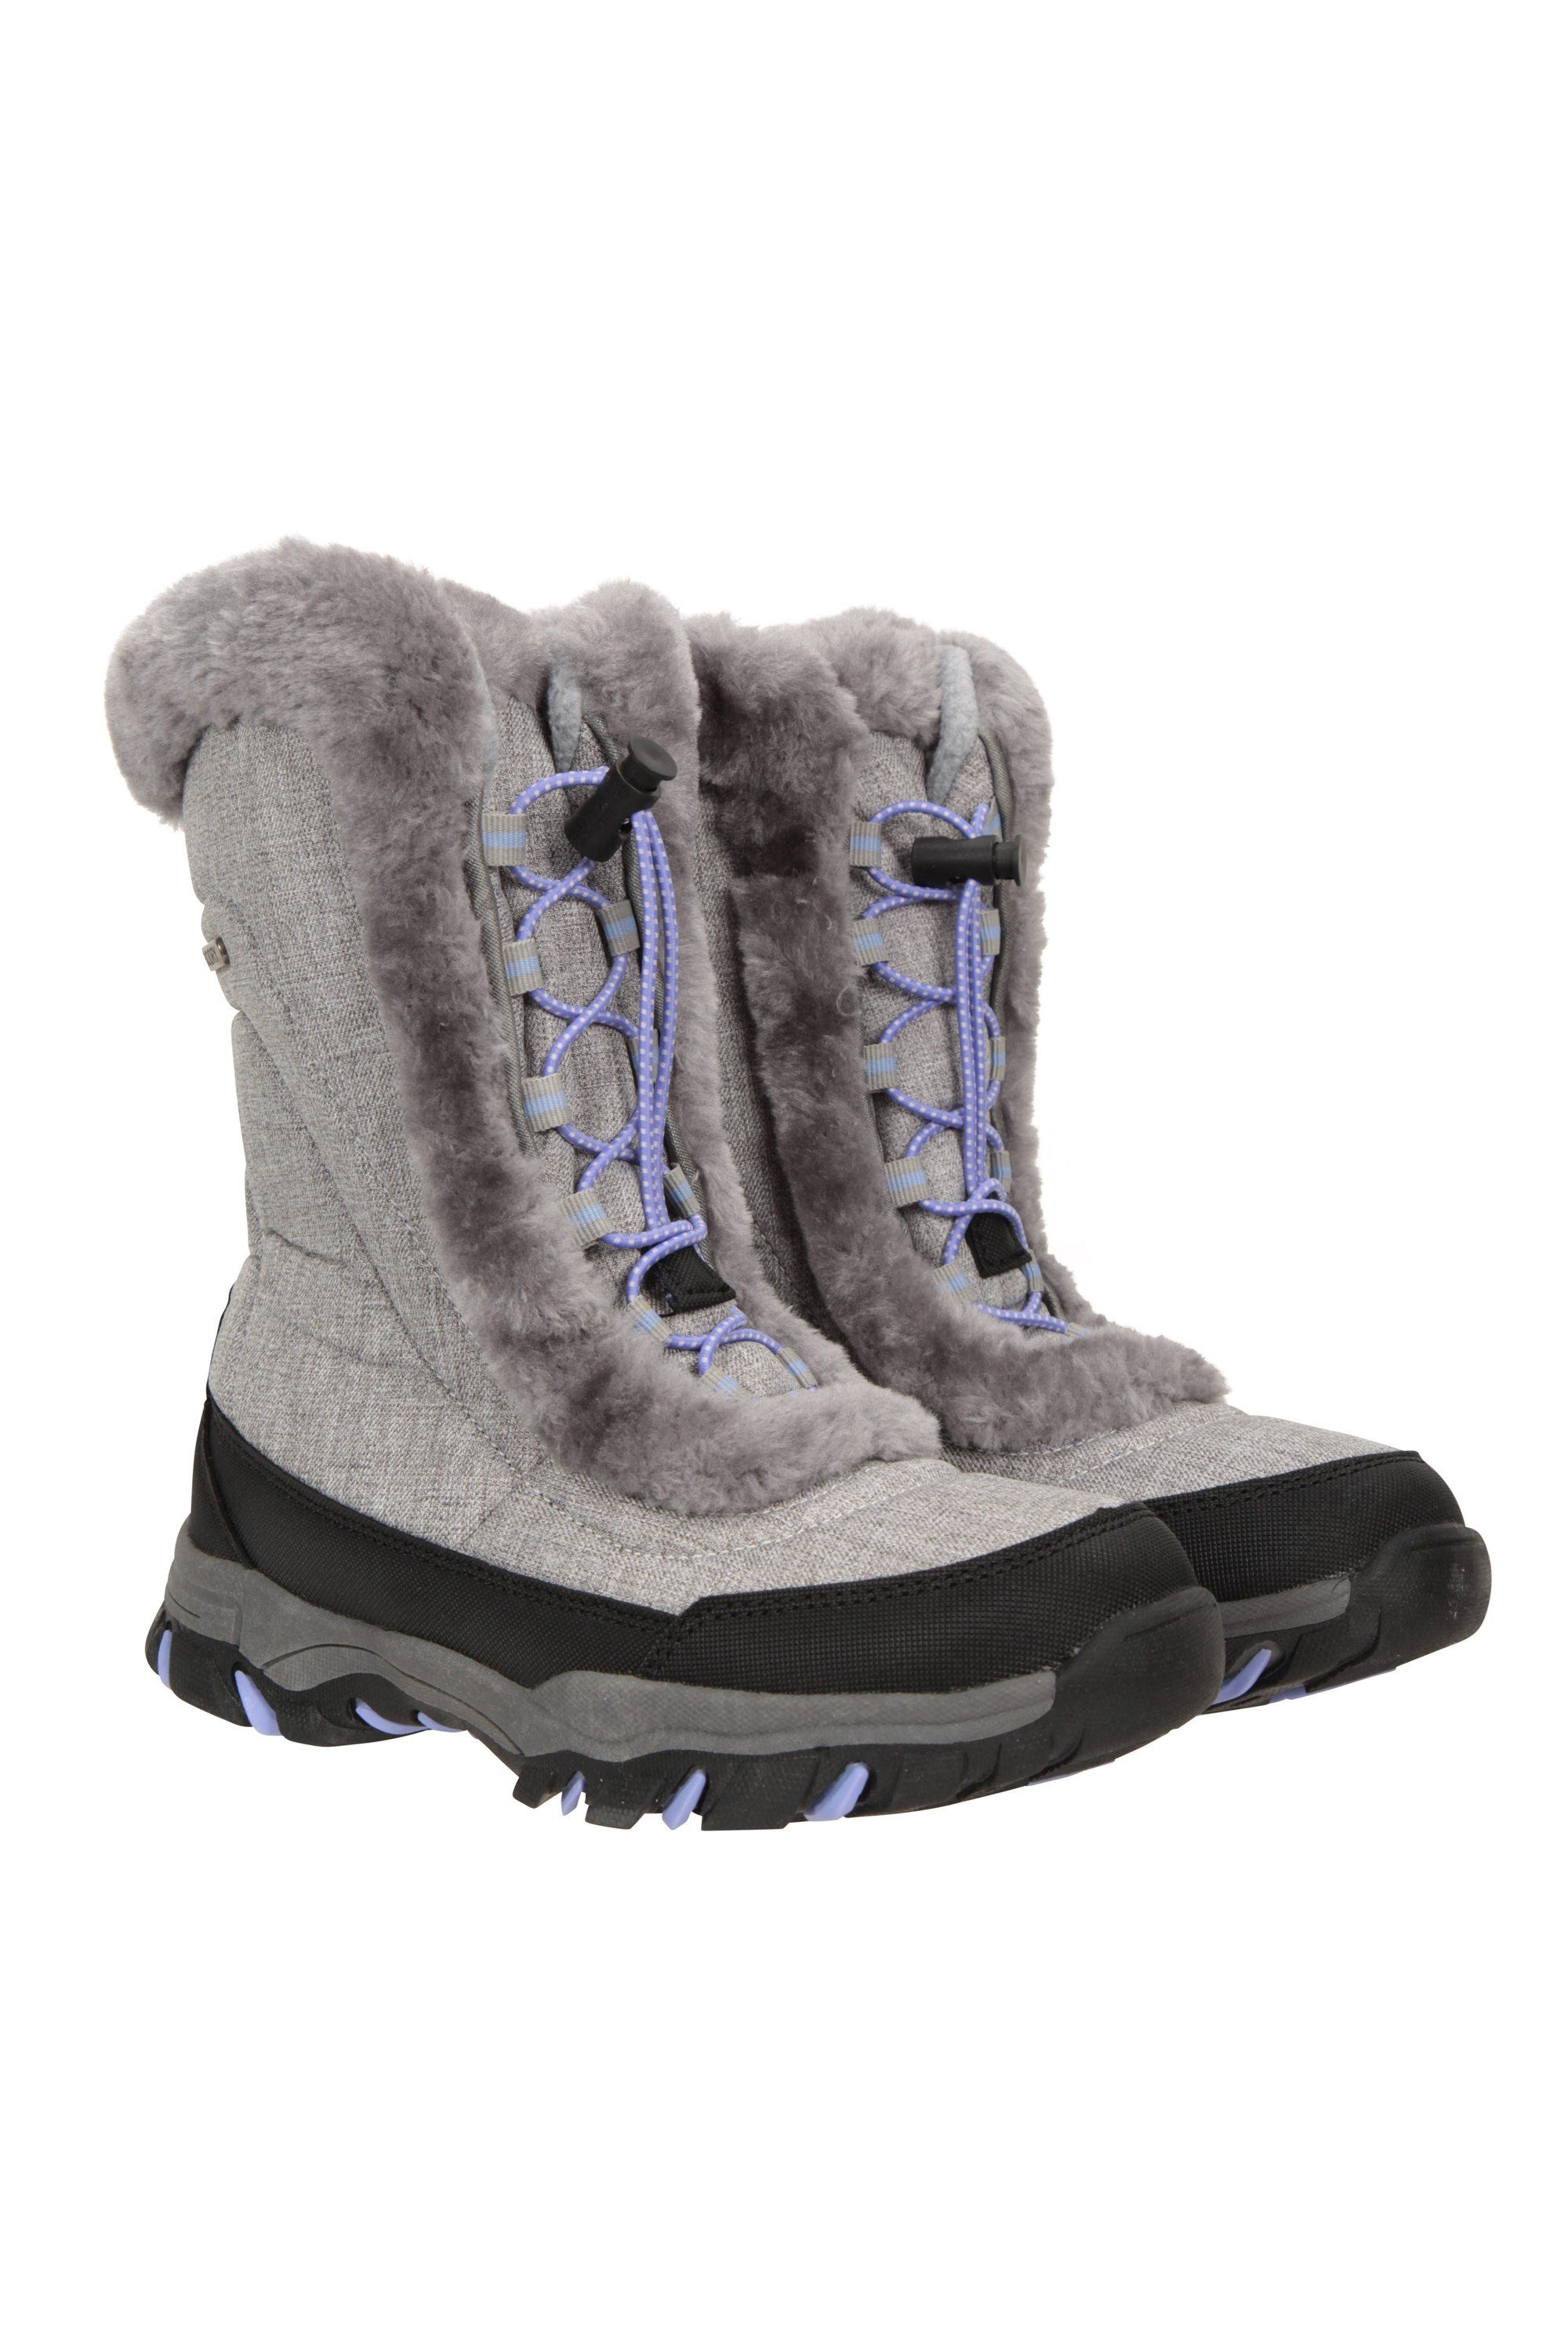 Ohio Kids Adaptive Snow Boots - Grey